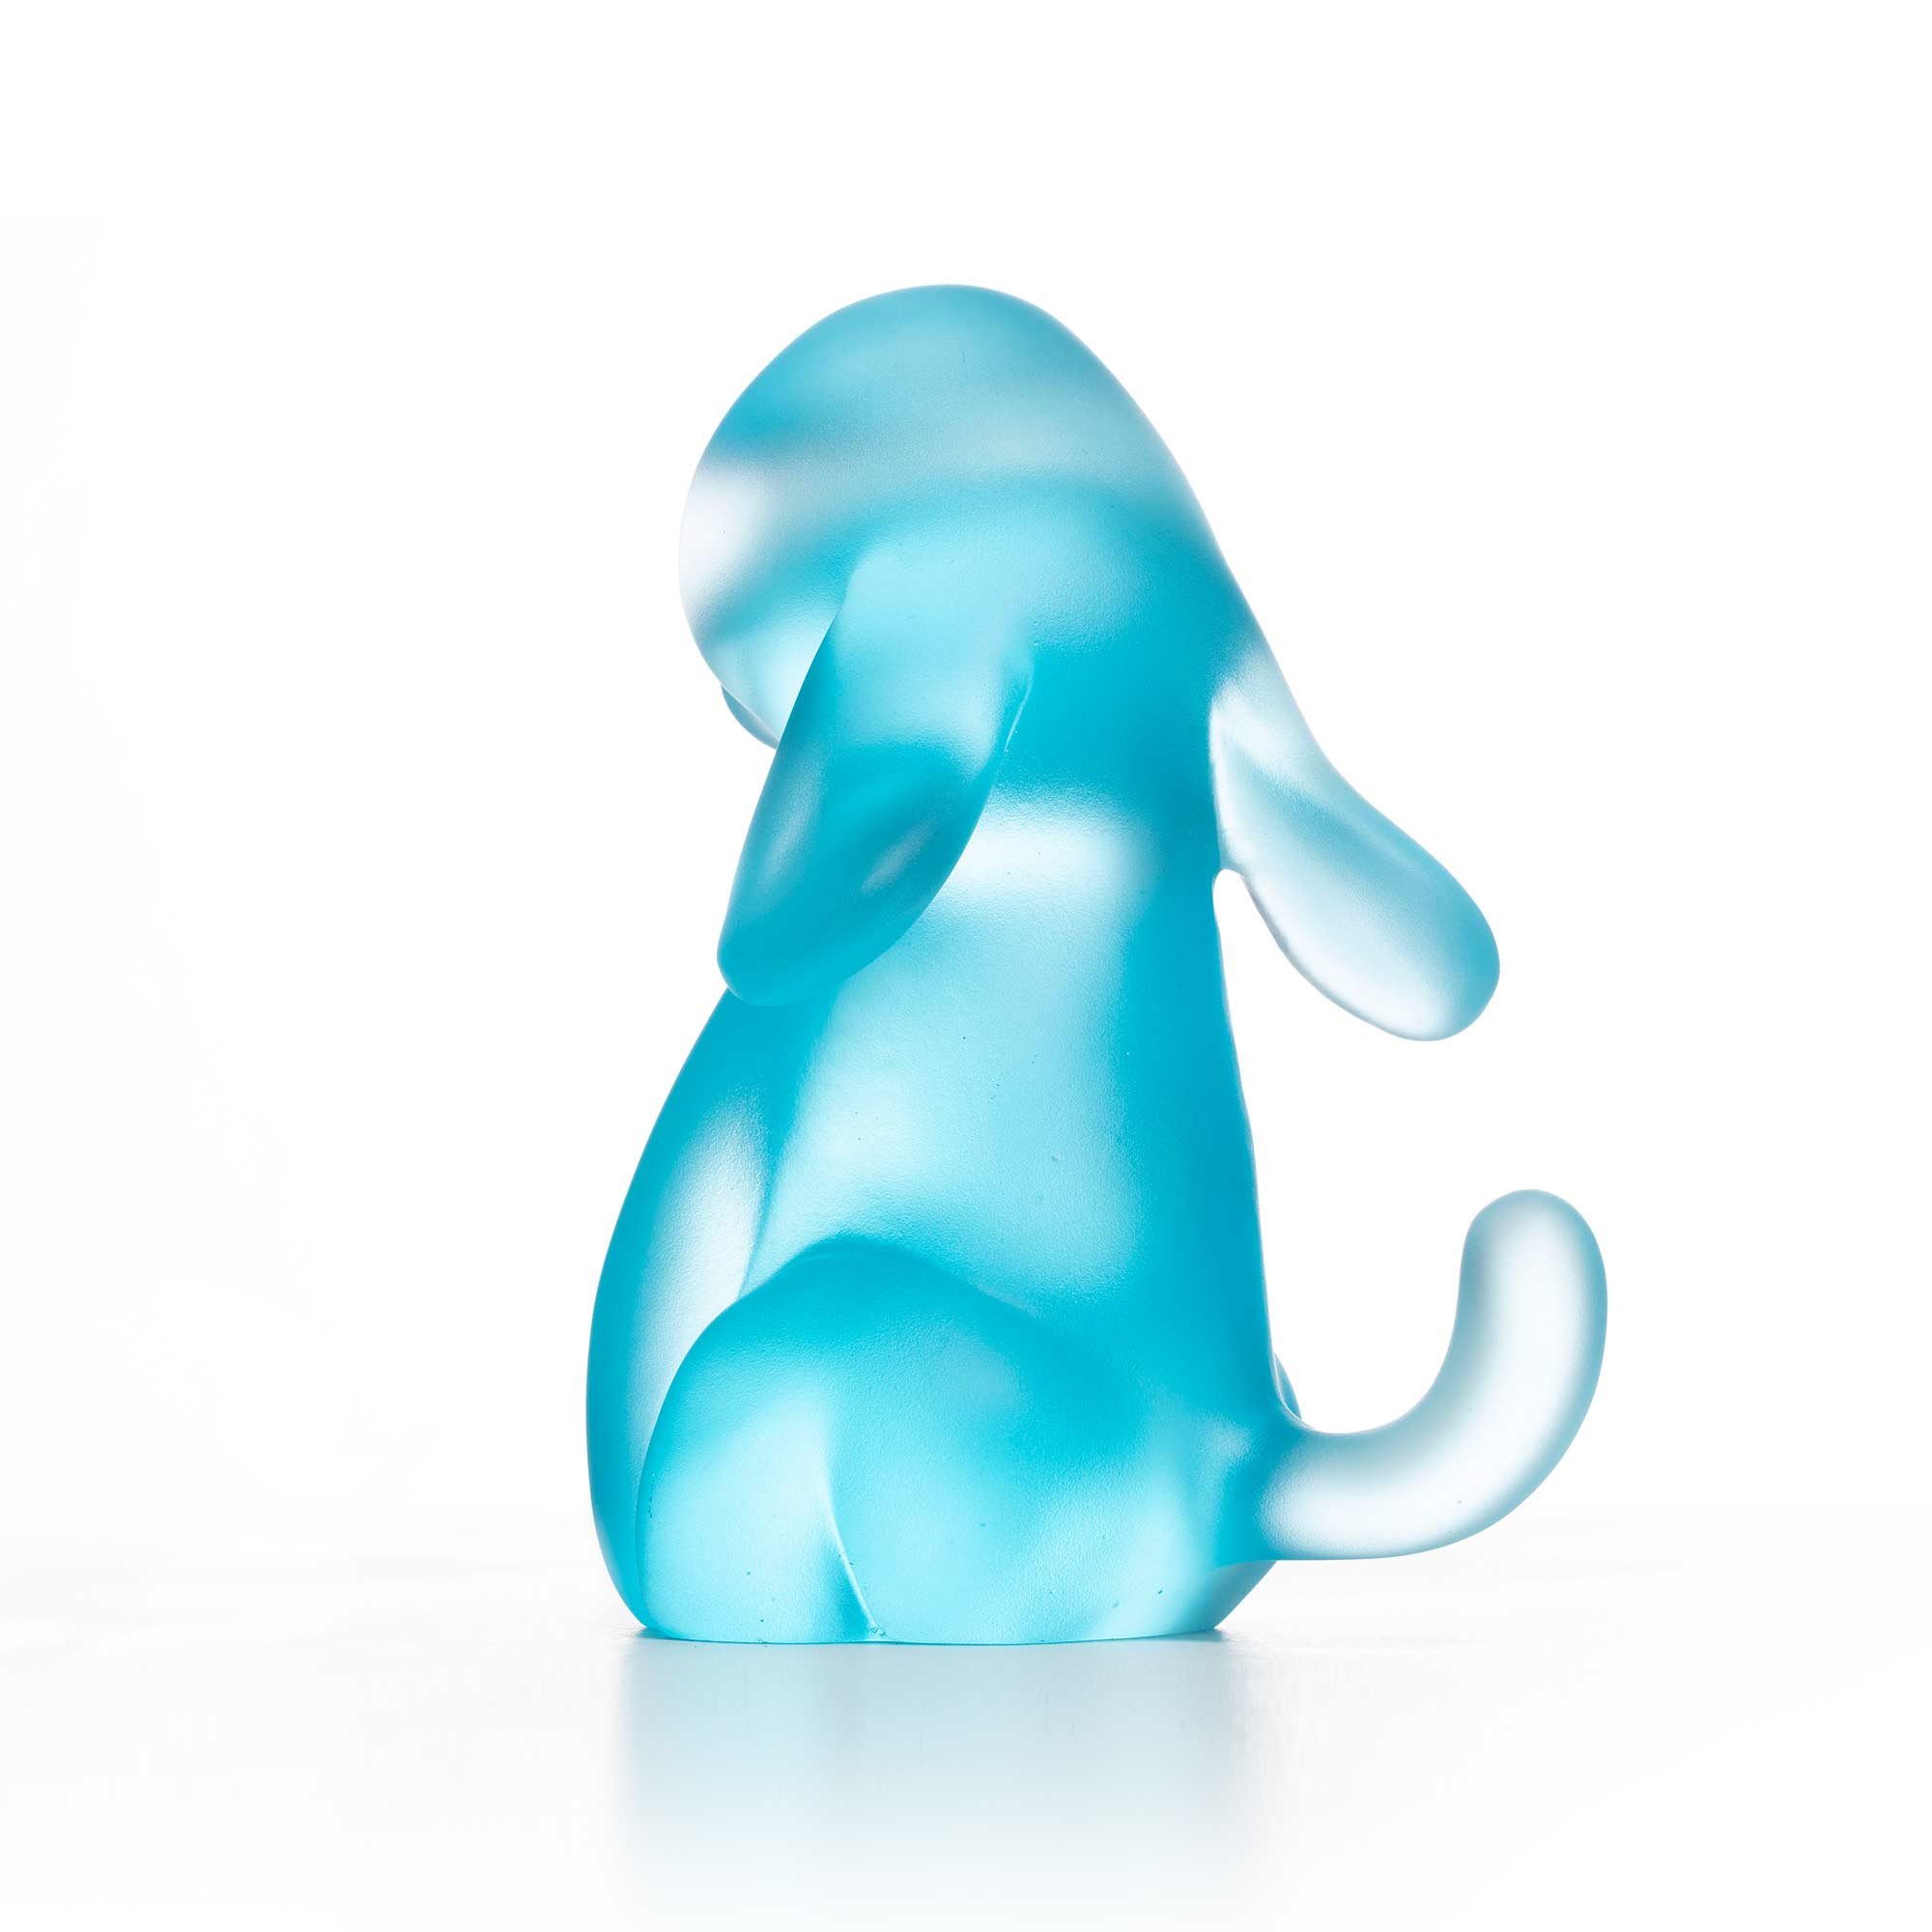 Dog Roar, blue crystal sculpture, limited edition by artist Ferdi B Dick, back view